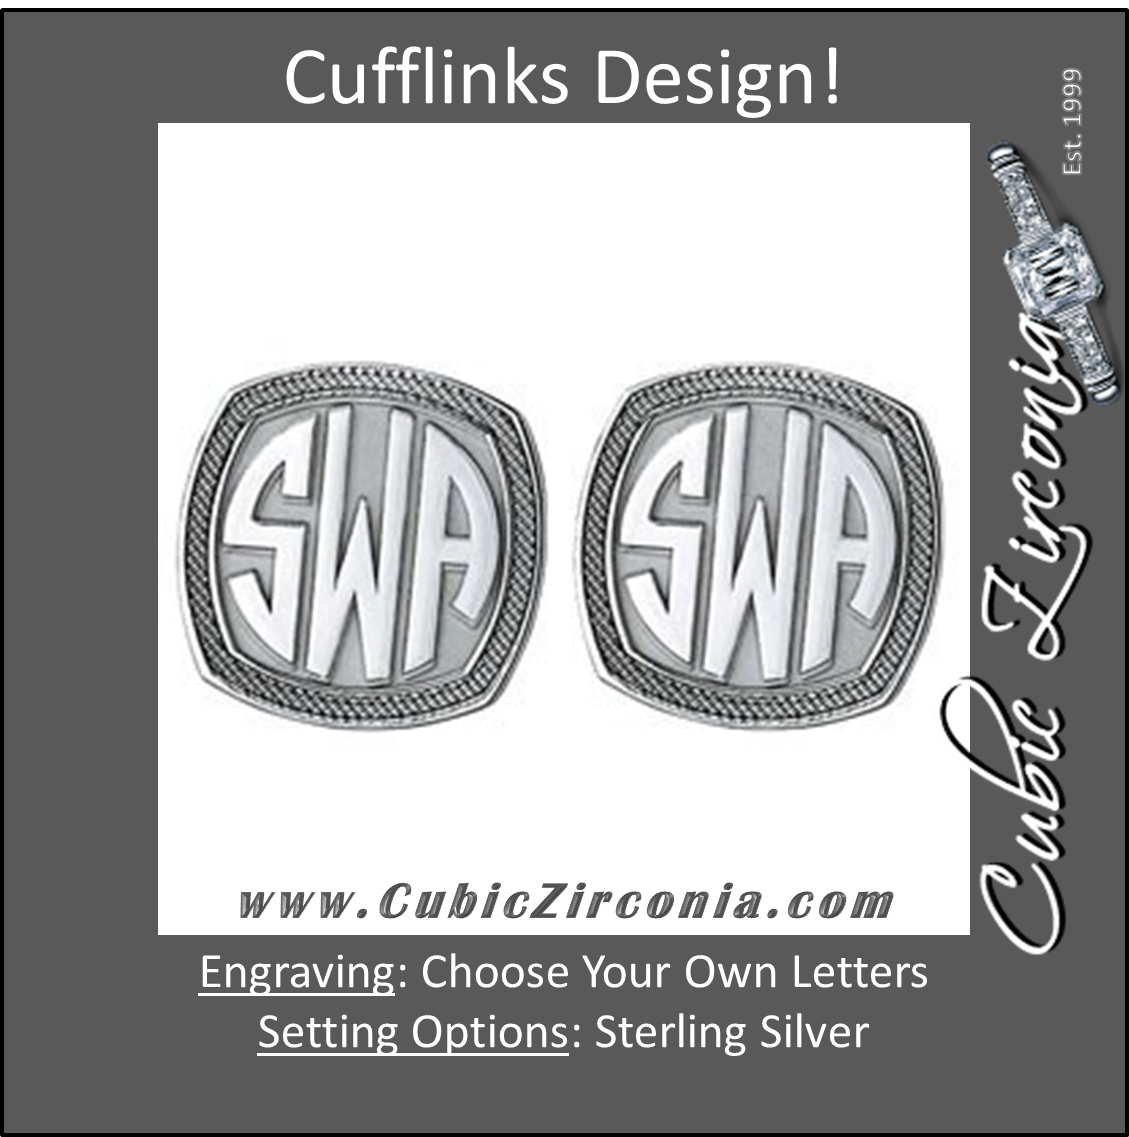 Men's Cufflinks- Customizable Monogram, Badge Style with Impact Letters and Double Milgrain Edges